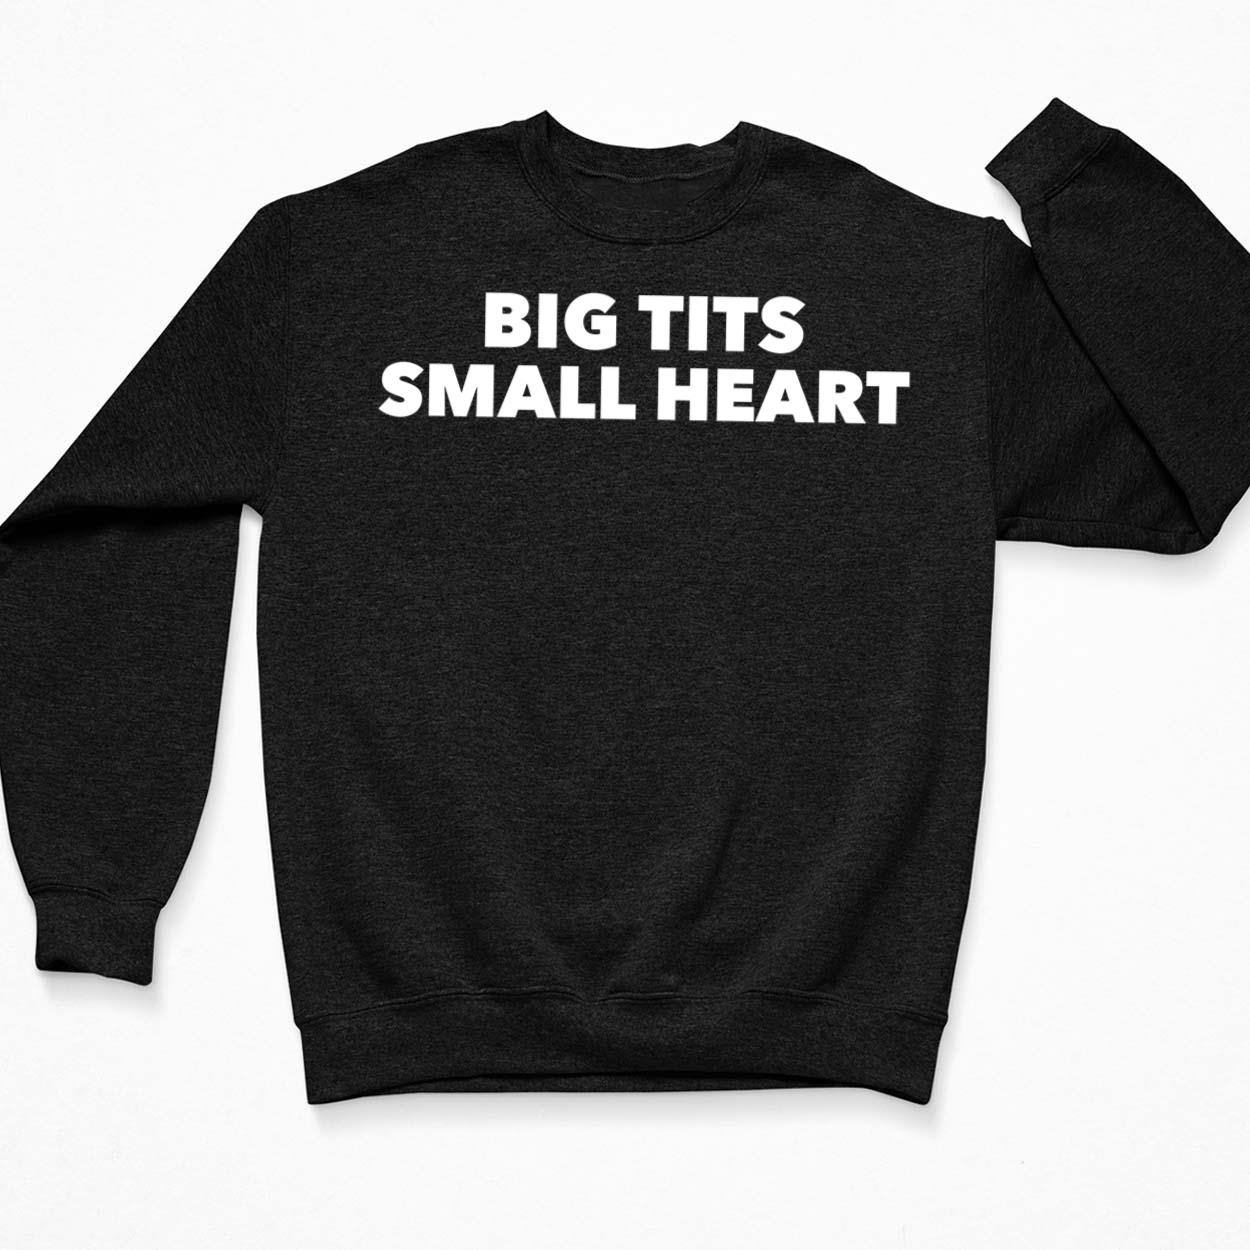 Small boobs big heart Design T Shirts For Men And Women - Banantees